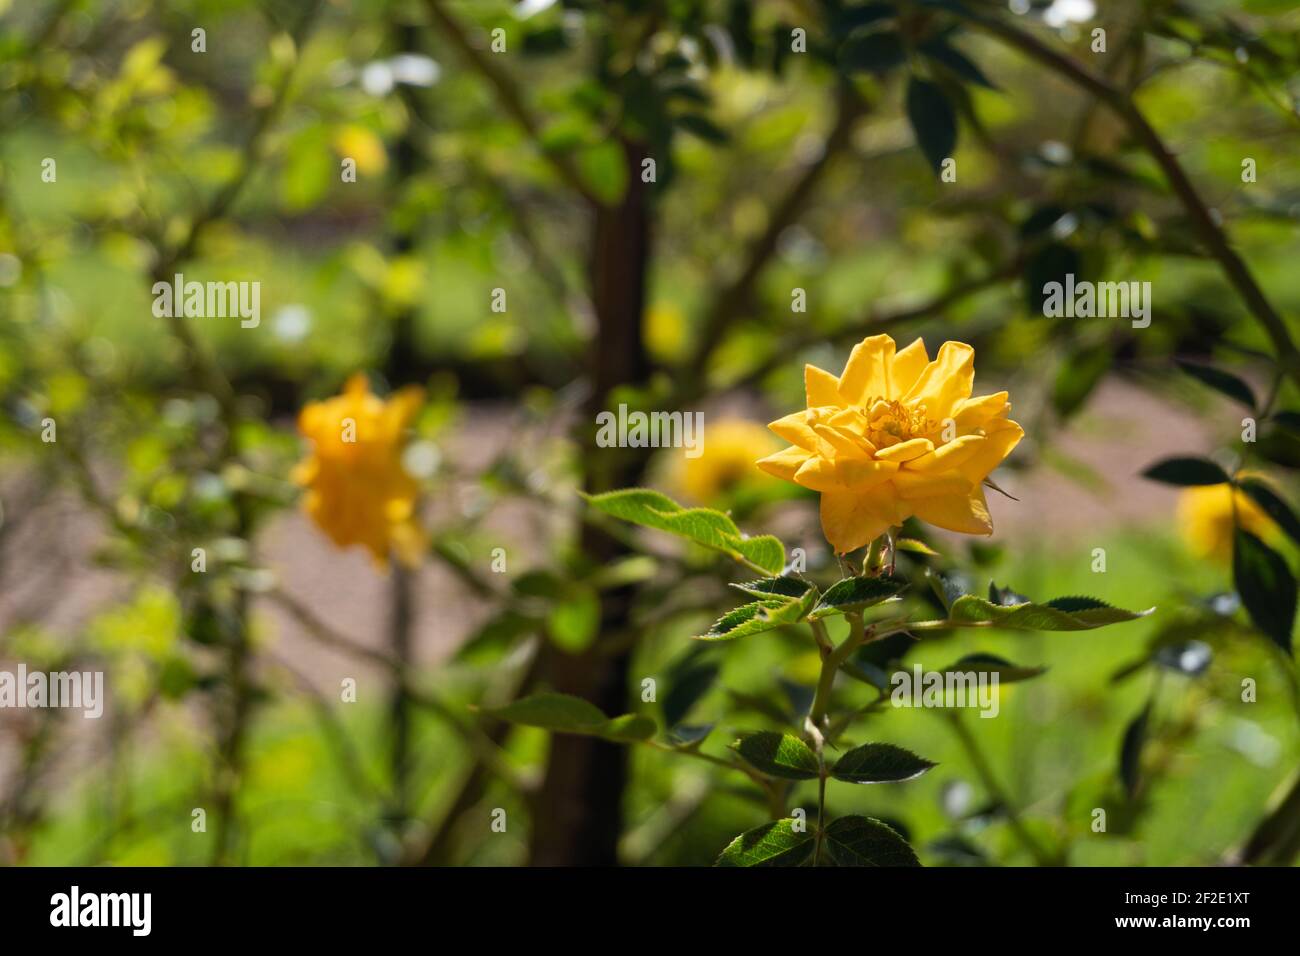 Rosa floribunda 'Goldmarie 82'. Horizontales Foto. Blume, goldgelbe Rose,  Kletterpflanze, Zierpflanze Stockfotografie - Alamy